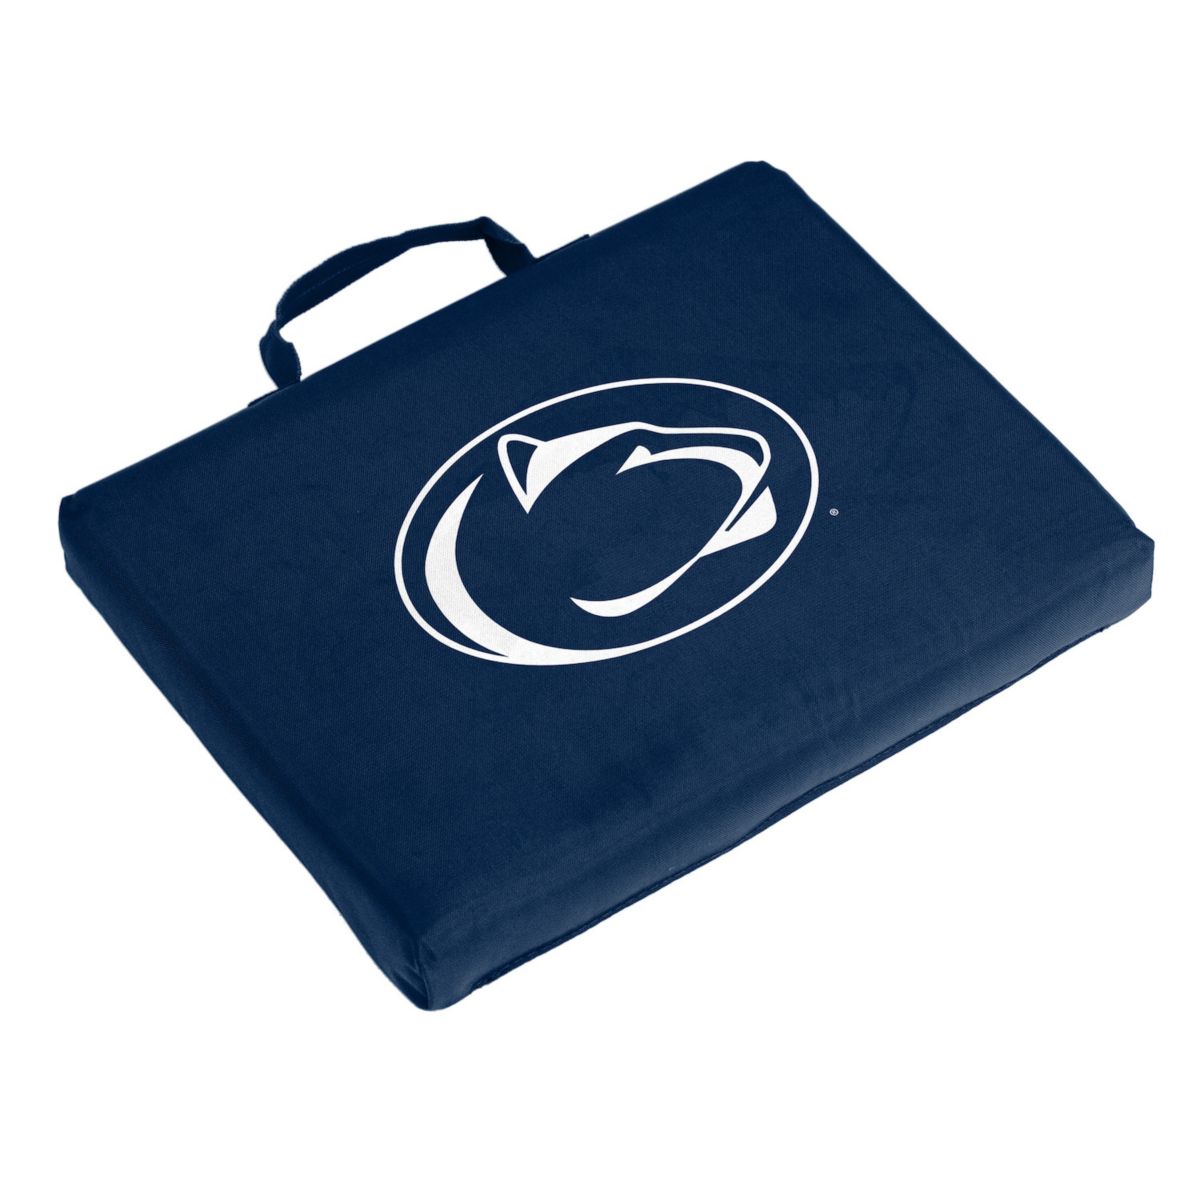 Отбеливающая подушка Nittany Lions с логотипом бренда Penn State Logo Brand